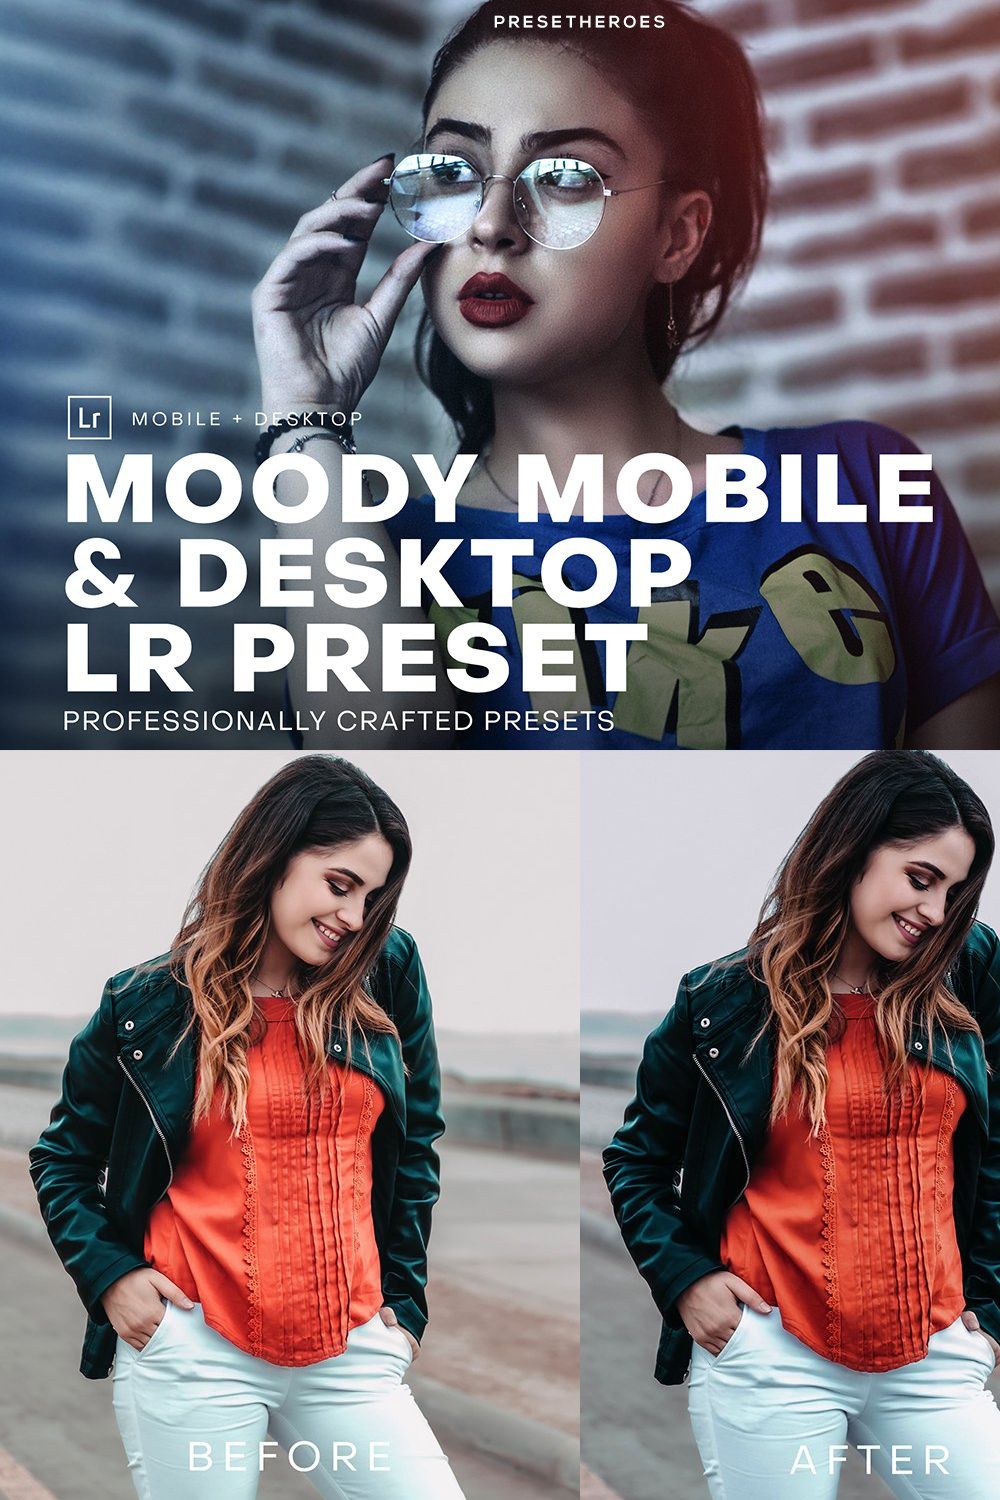 Moody Mobile and Desktop Lightroom pinterest preview image.